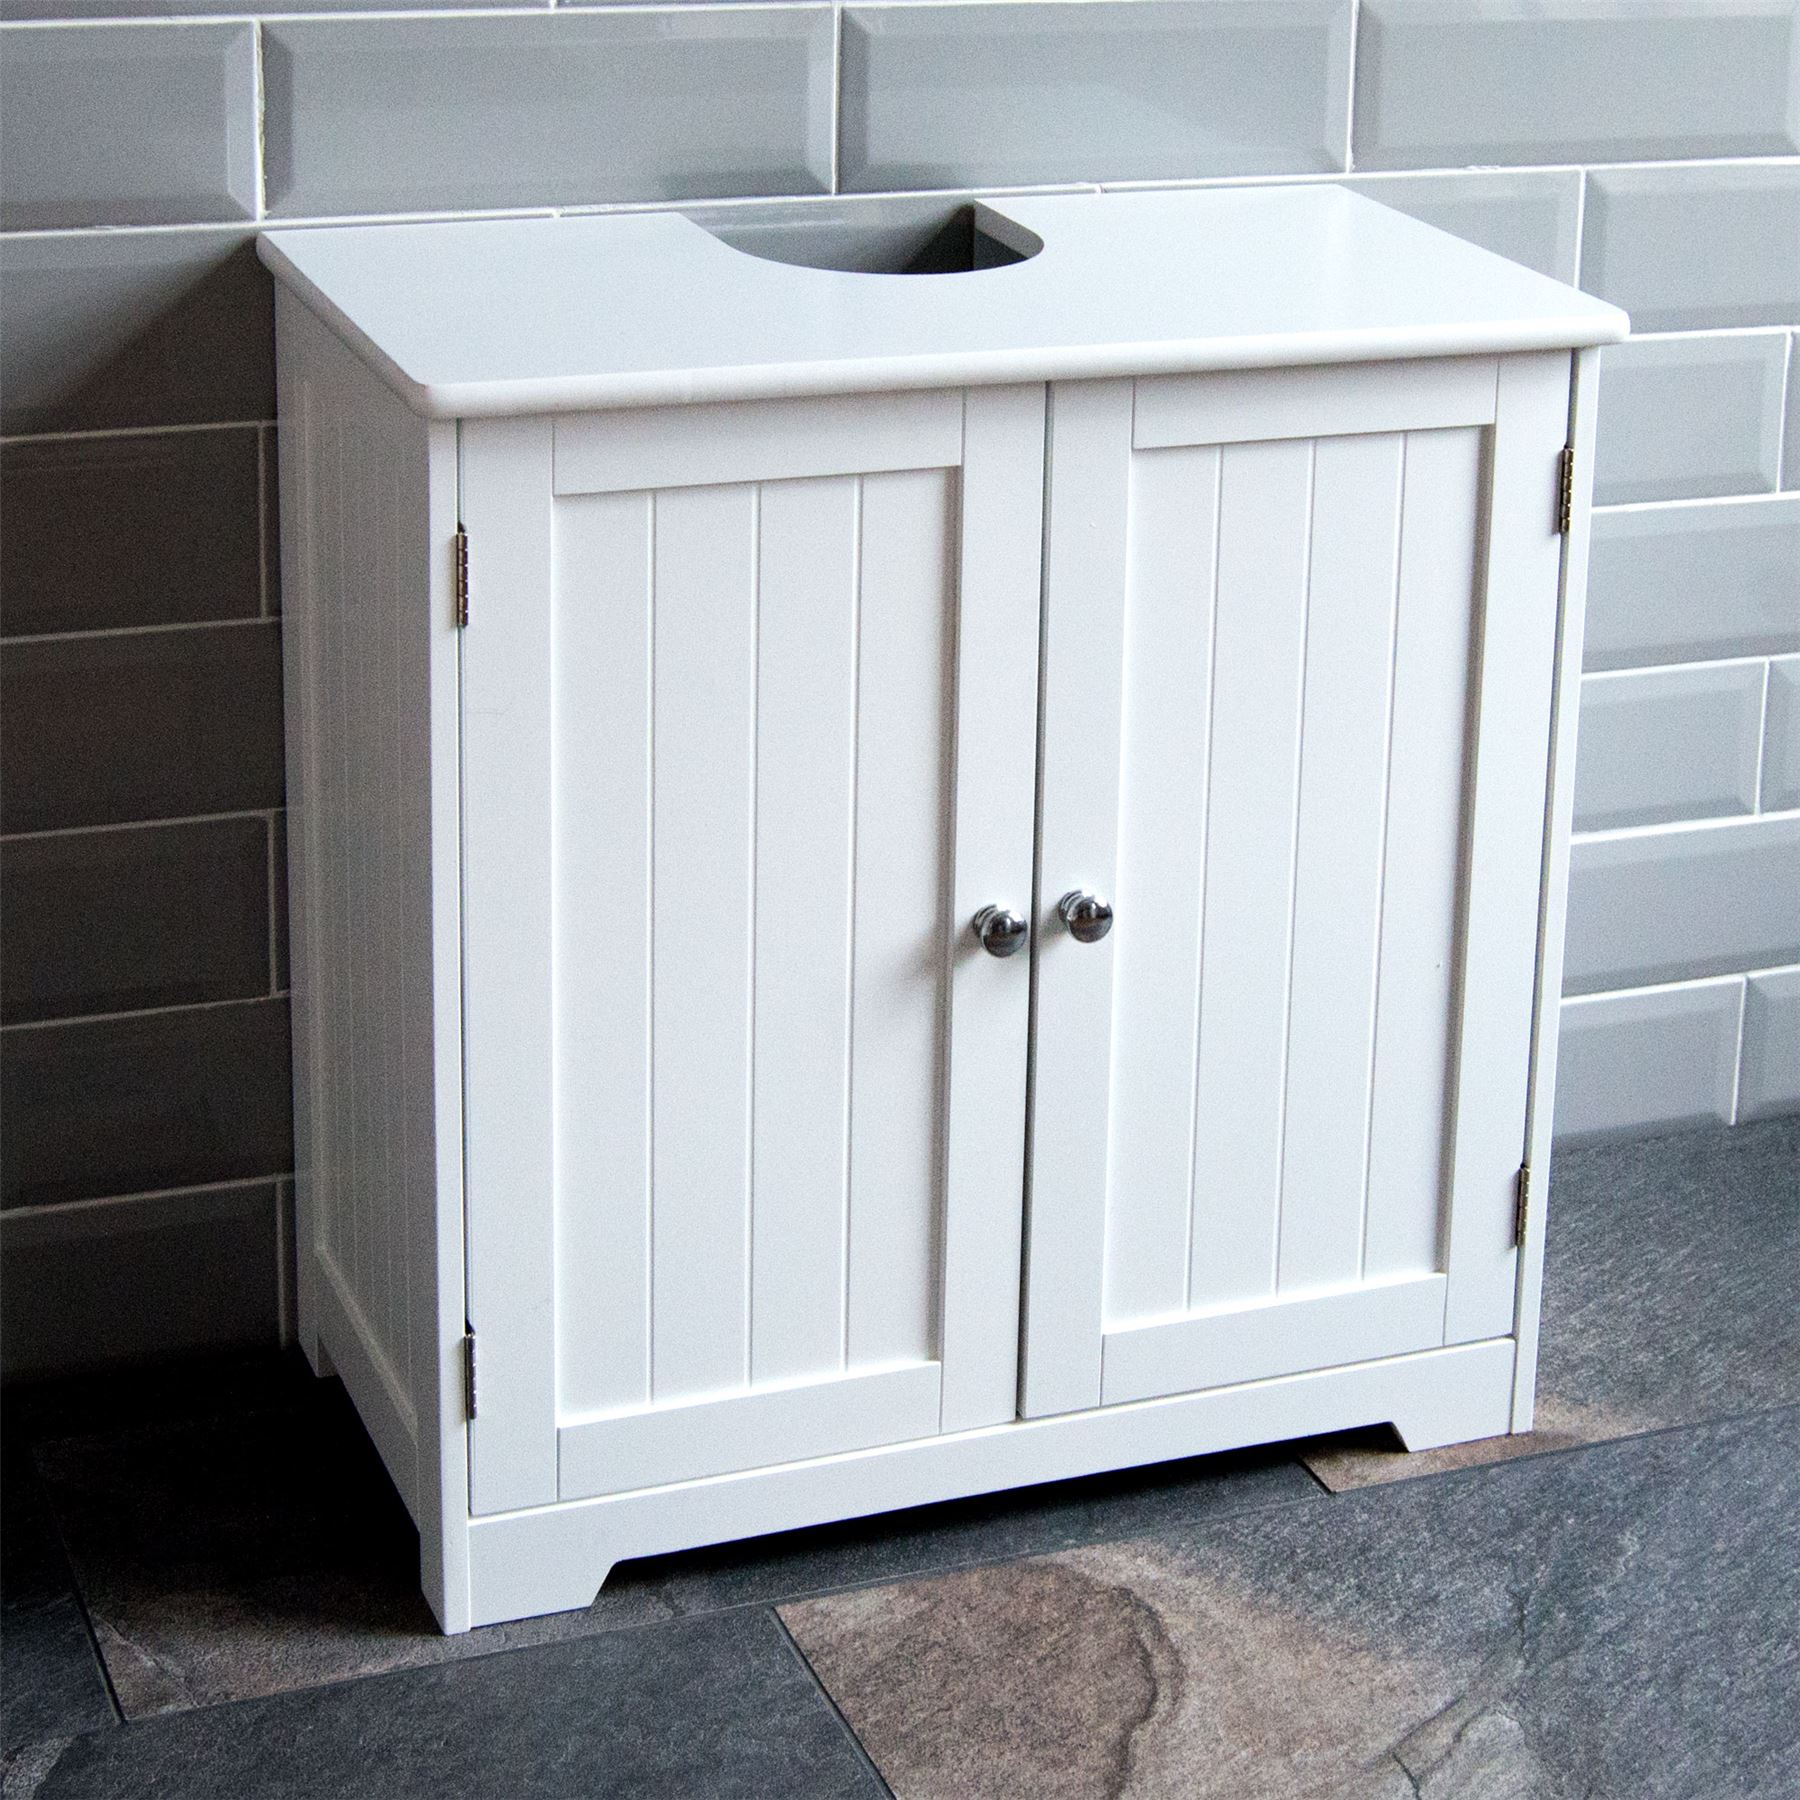 Details About Priano Bathroom Sink Cabinet Under Basin Unit Cupboard Storage Furniture White regarding measurements 1800 X 1800